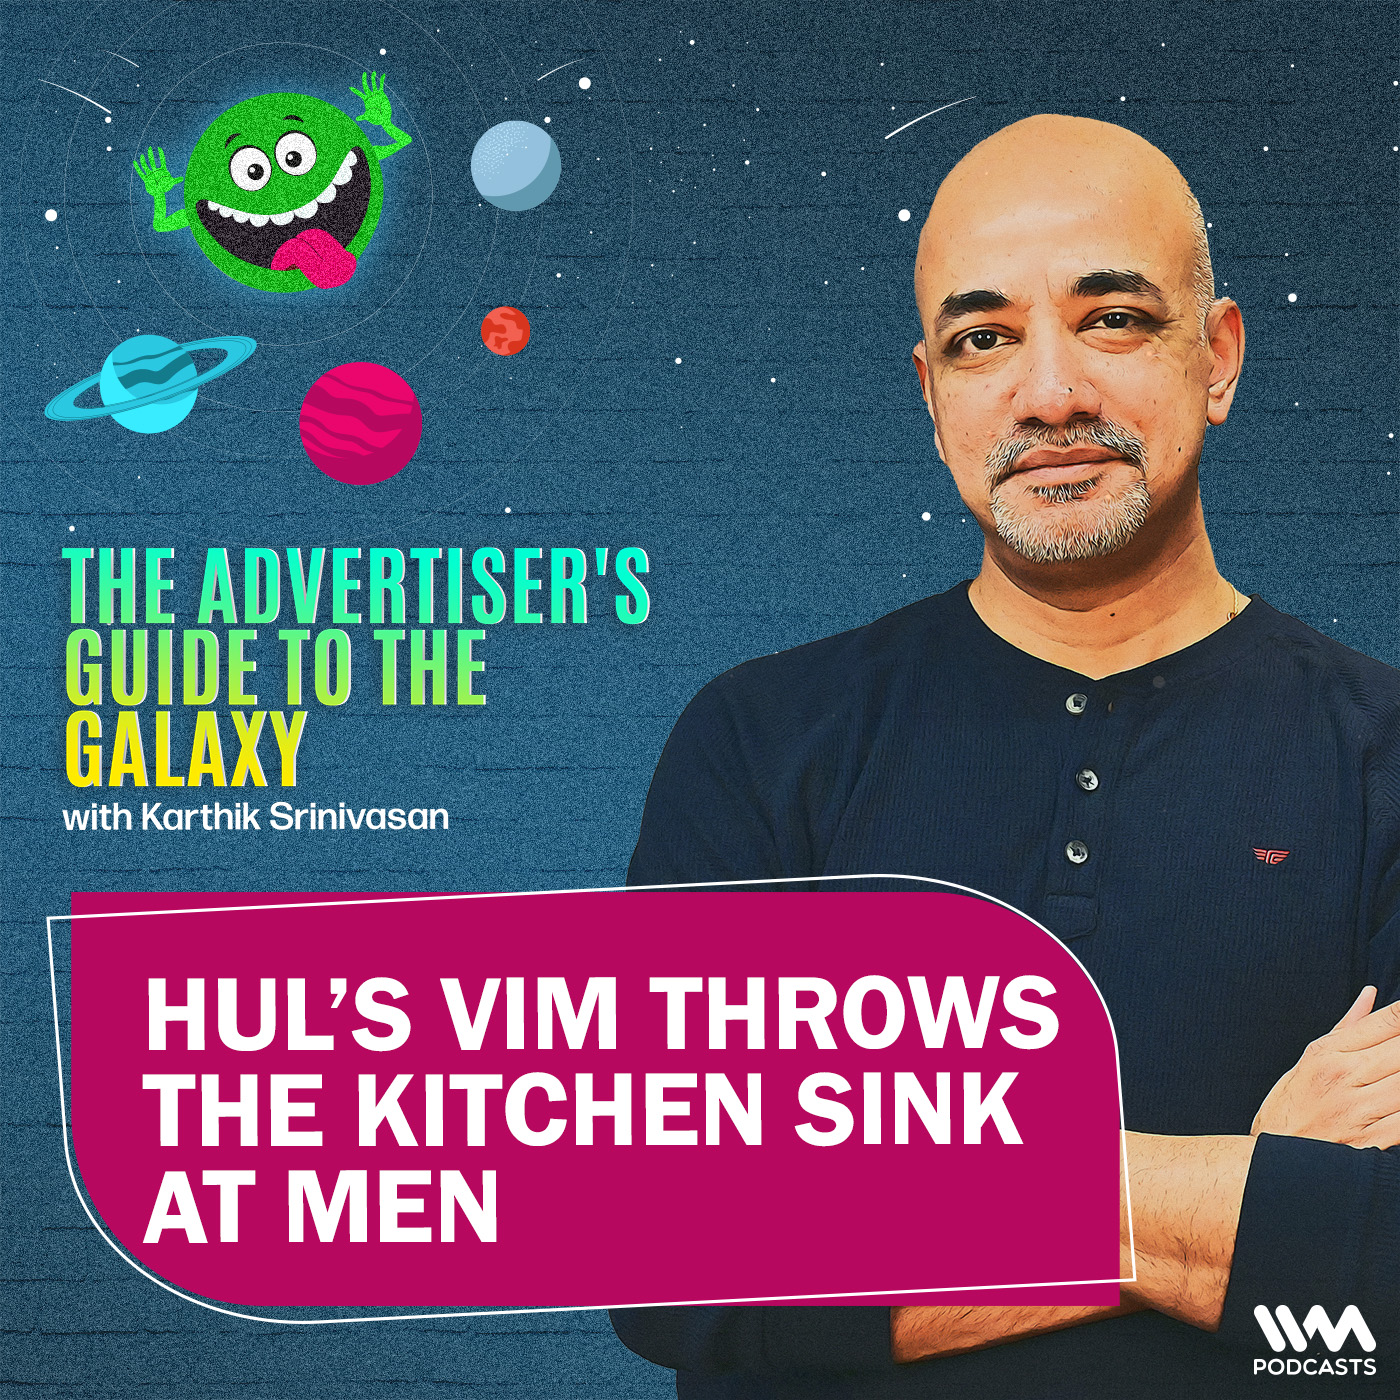 HUL’s Vim throws the kitchen sink at men